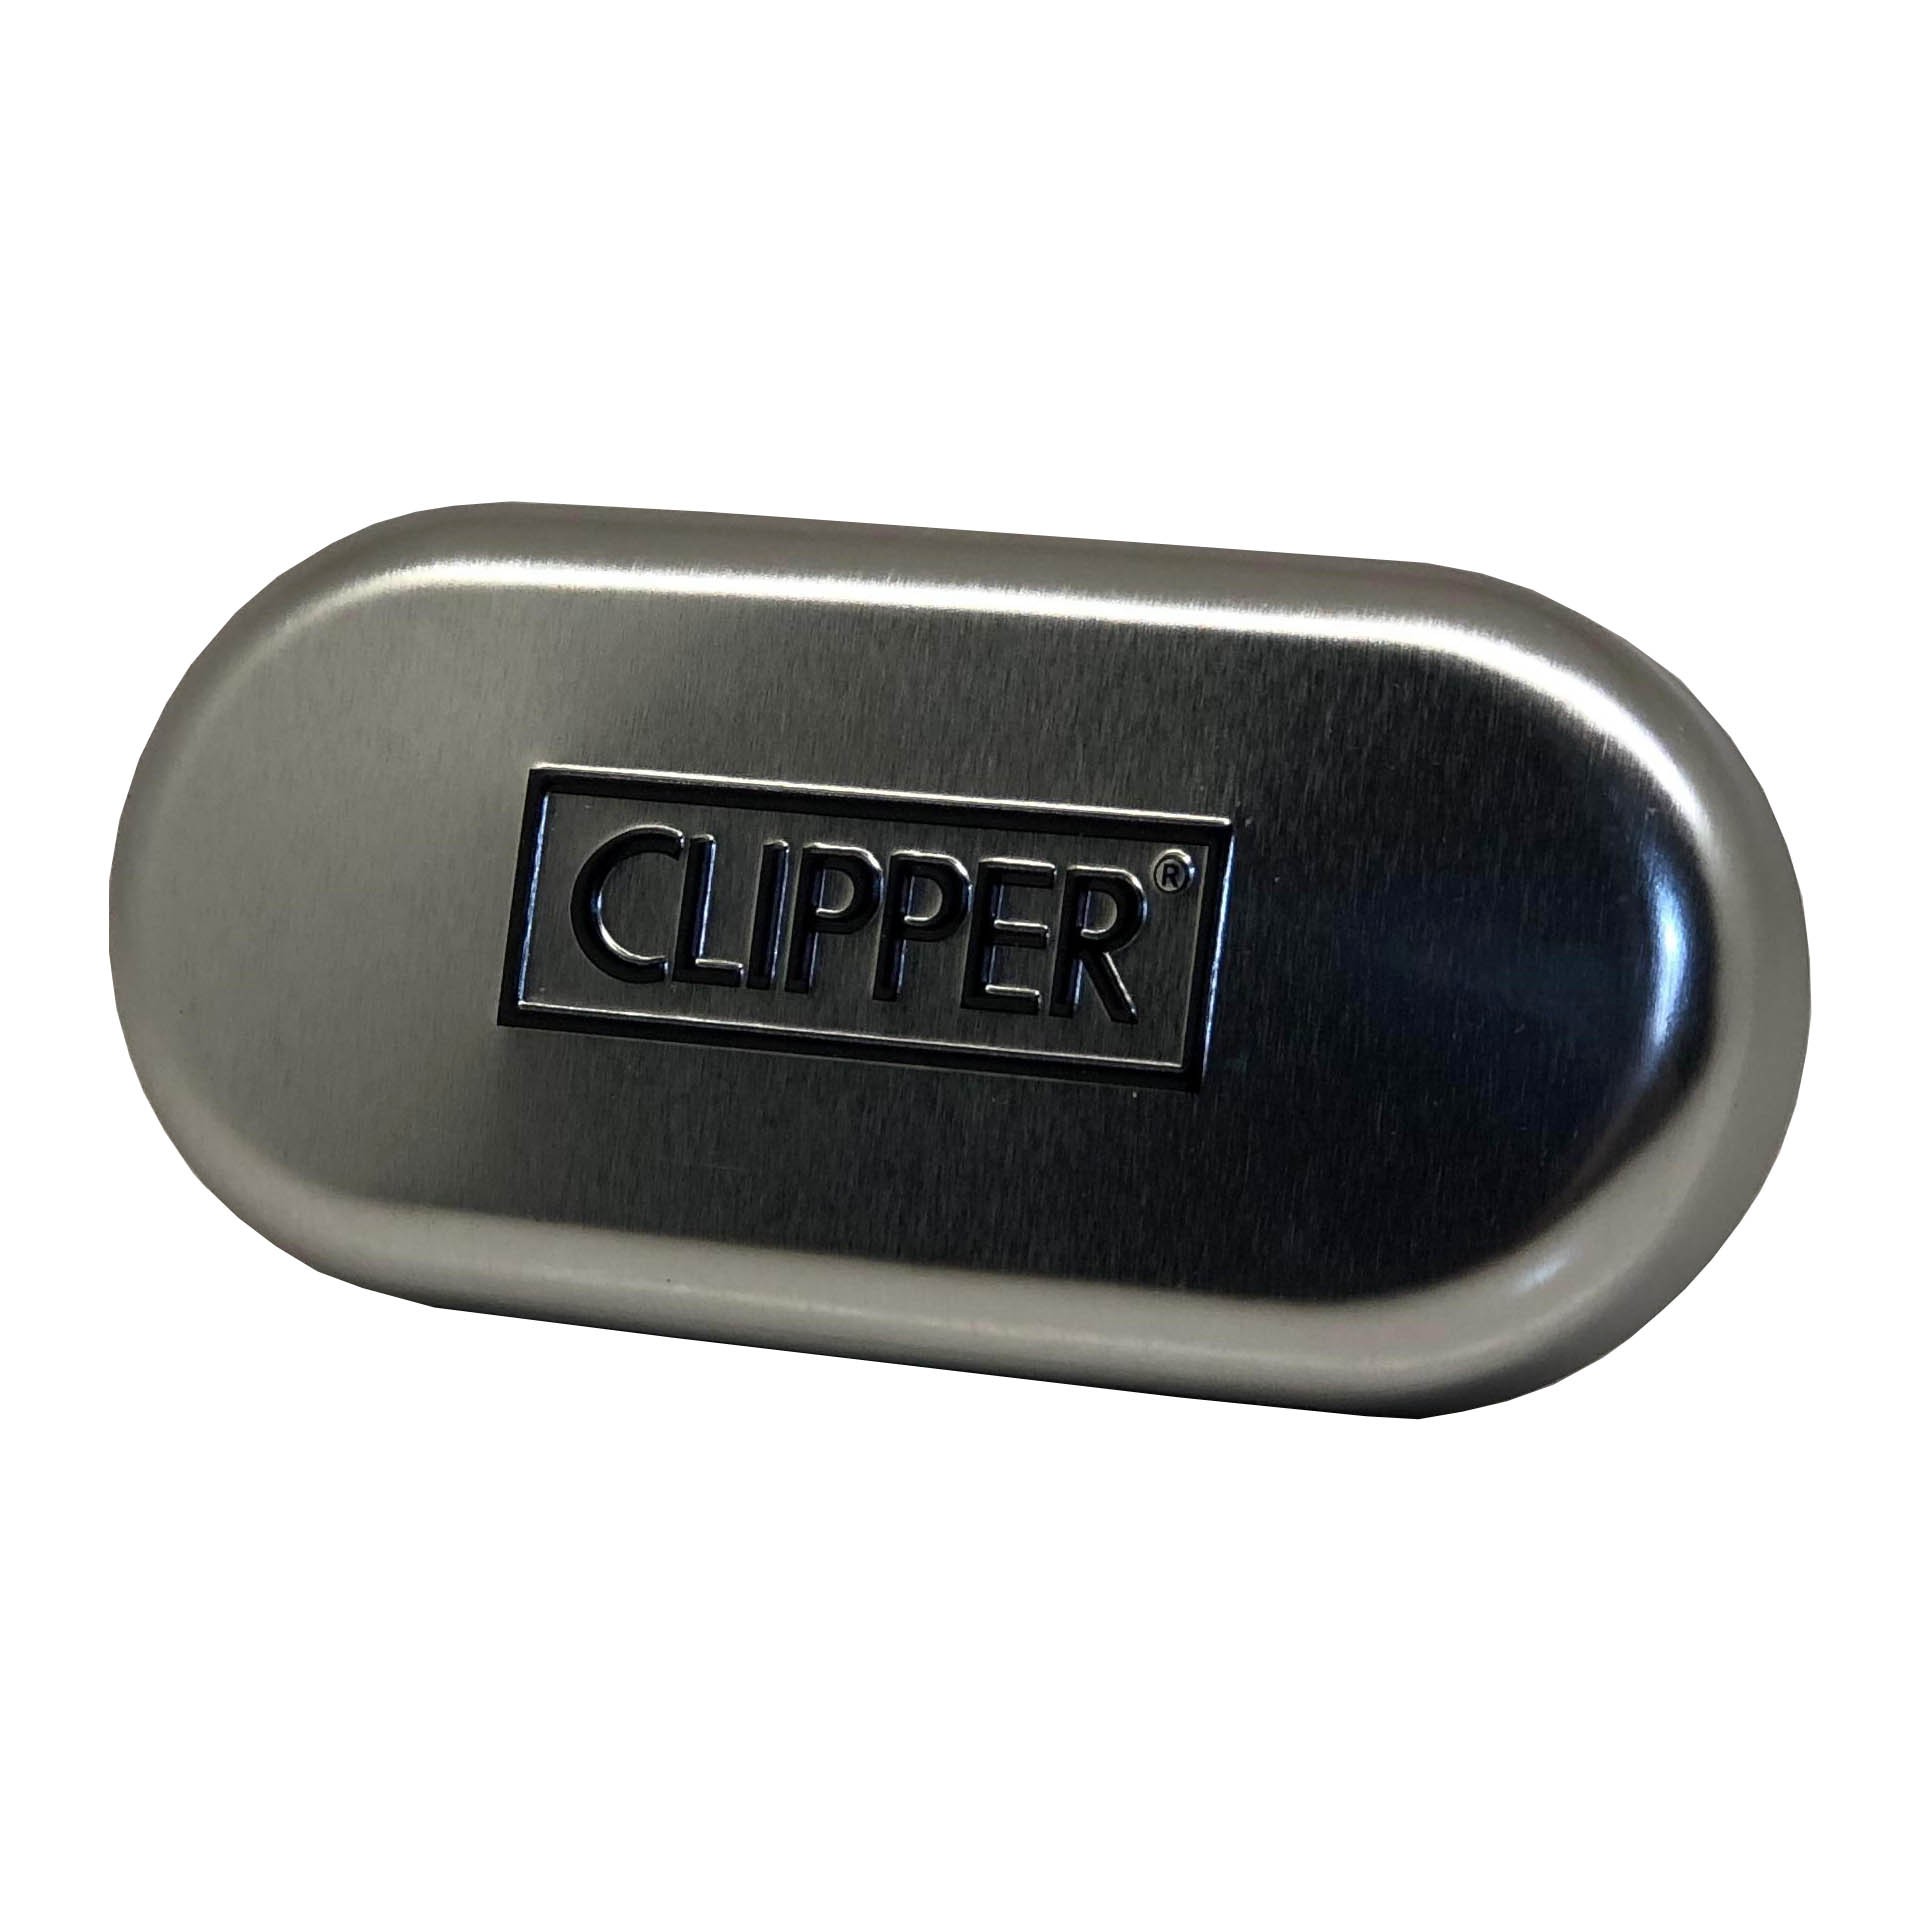 جعبه فندک کلیپر مدل Clipper Gift کد 75980